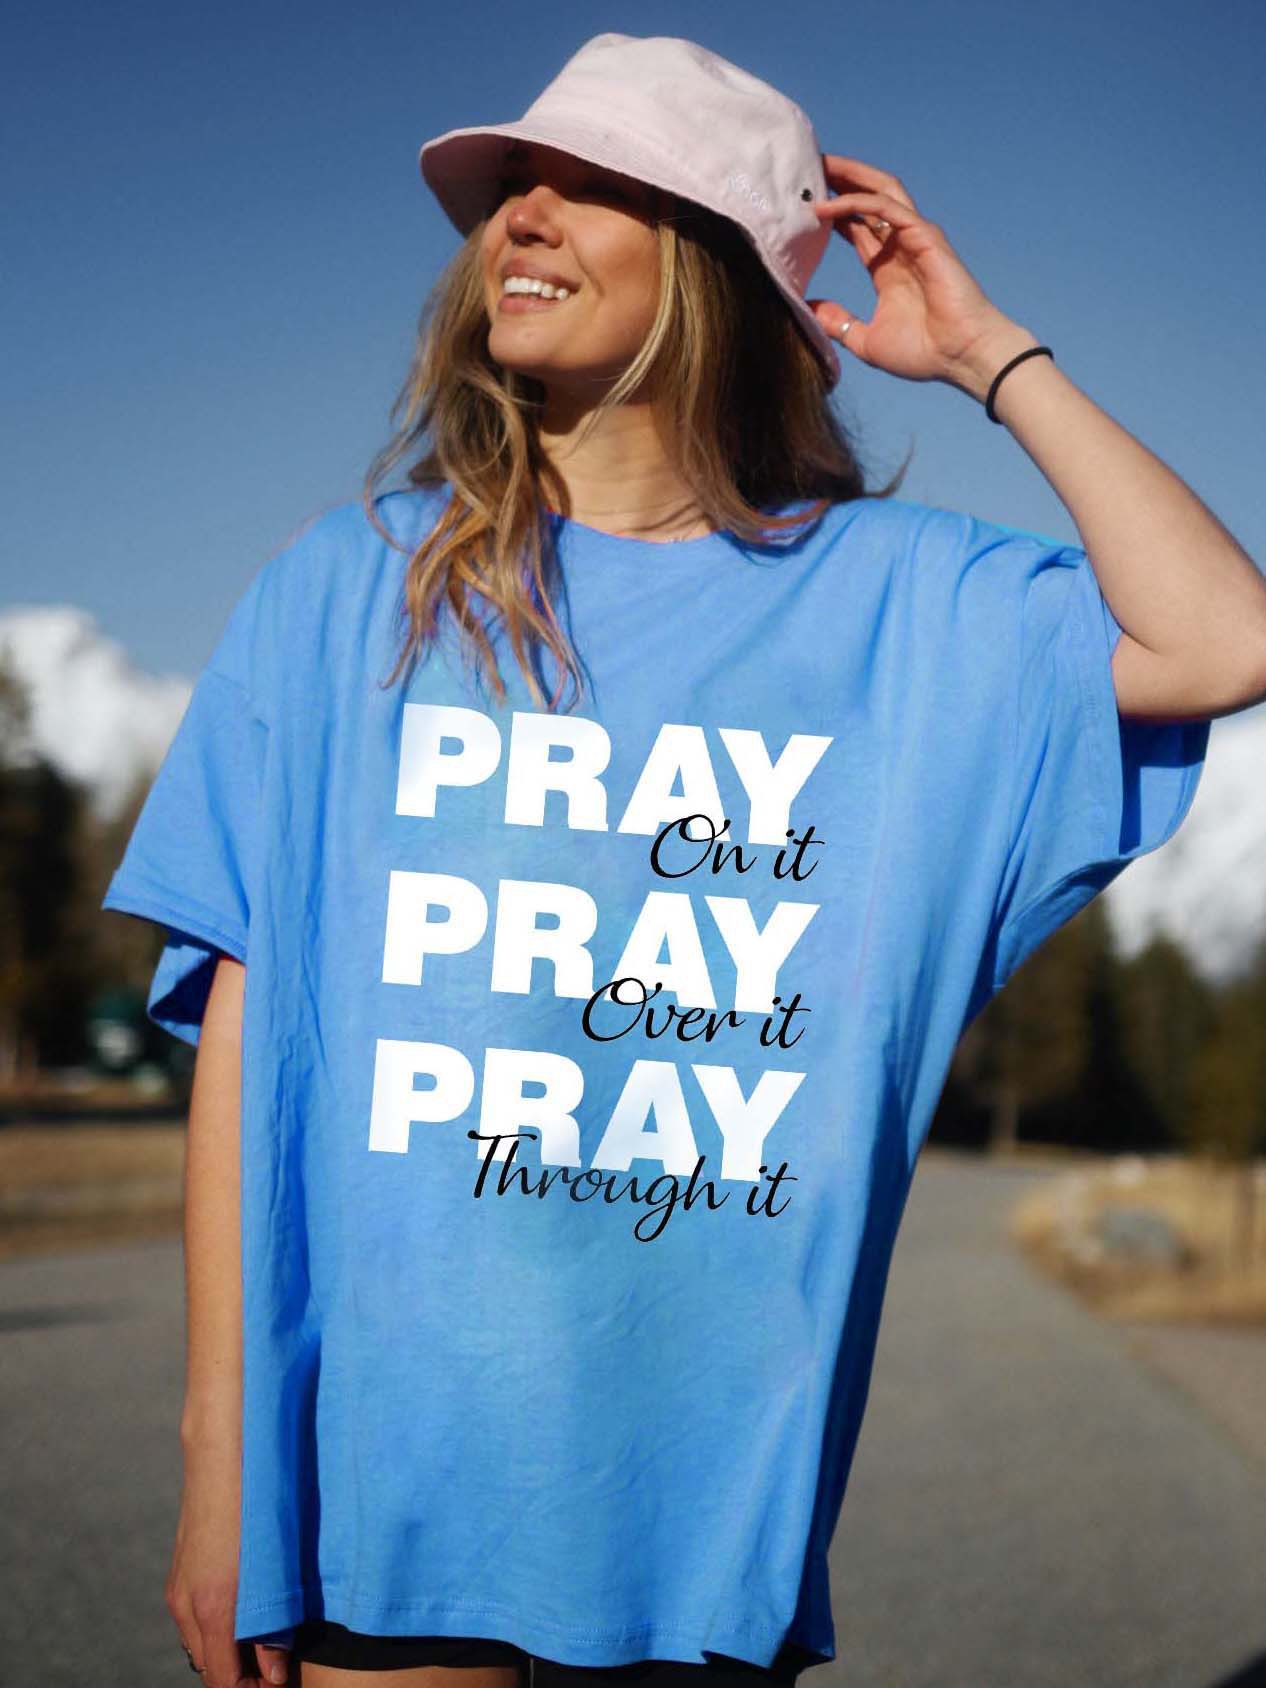 Women's Pray On It Chic Pray Over It Pray Through It Oversized Cotton T-shirt